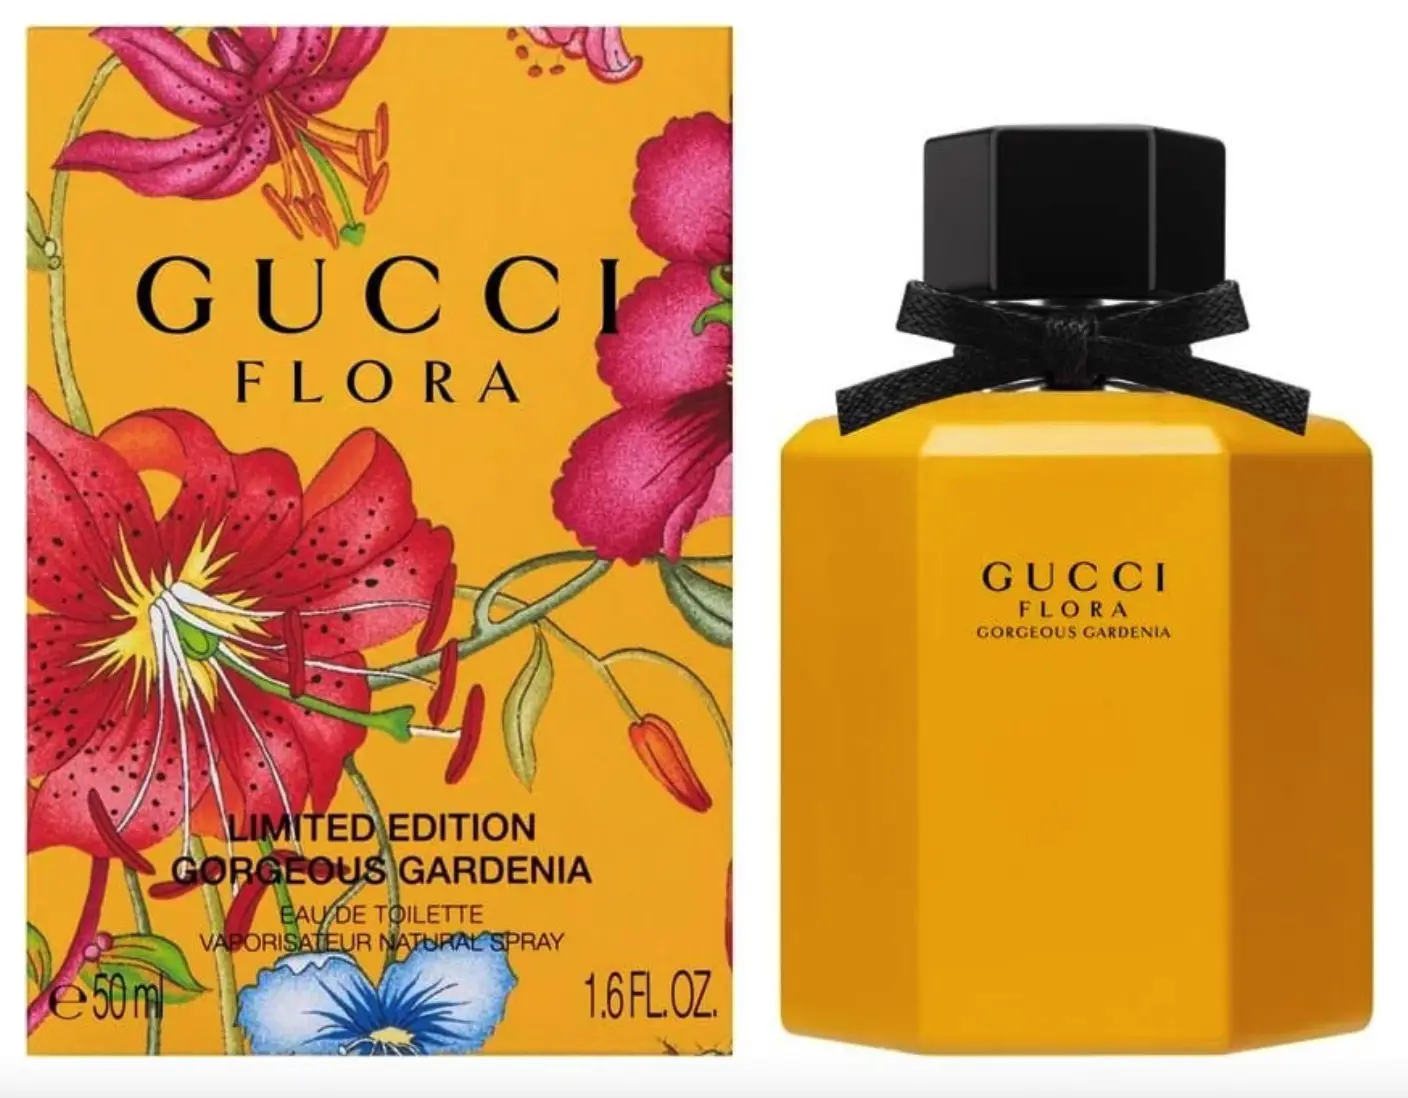 Gucci Perfume Gucci Flora Gorgeous Gardenia 